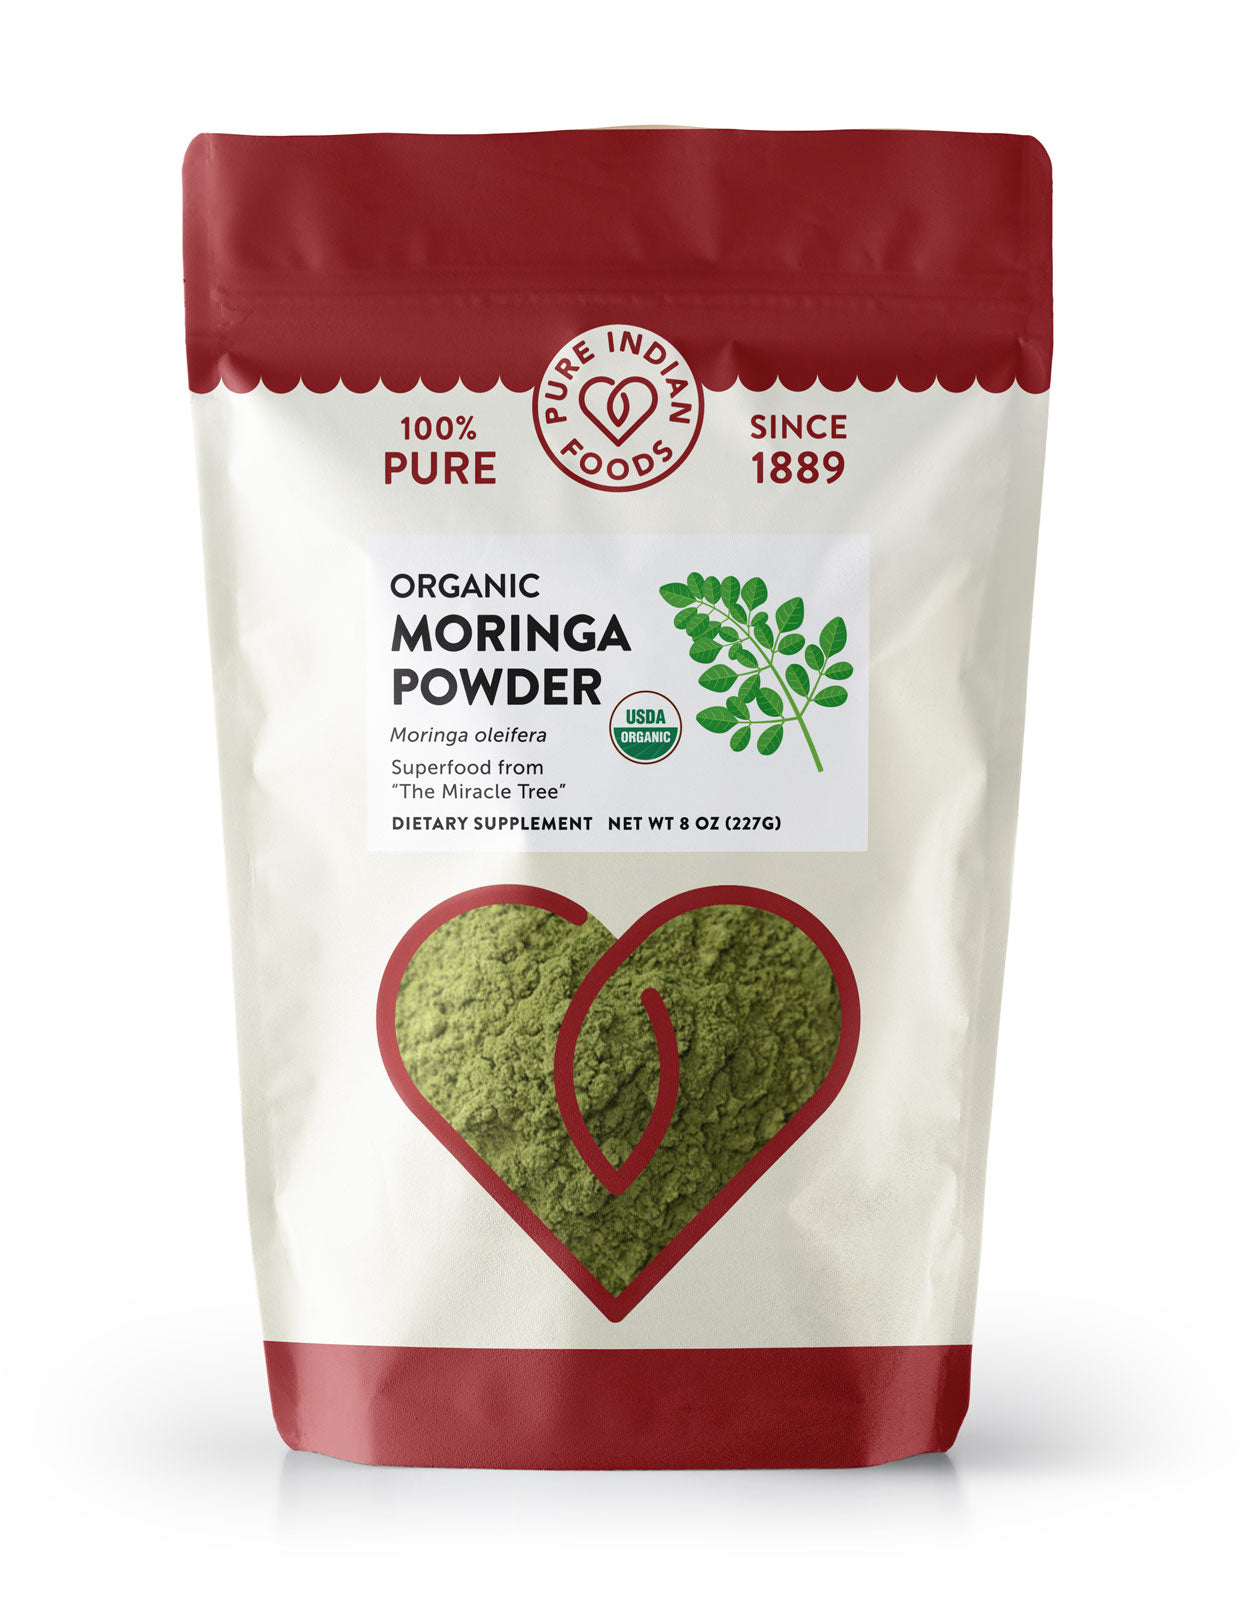 1 bag of Pure Indian Foods Organic Moringa Powder